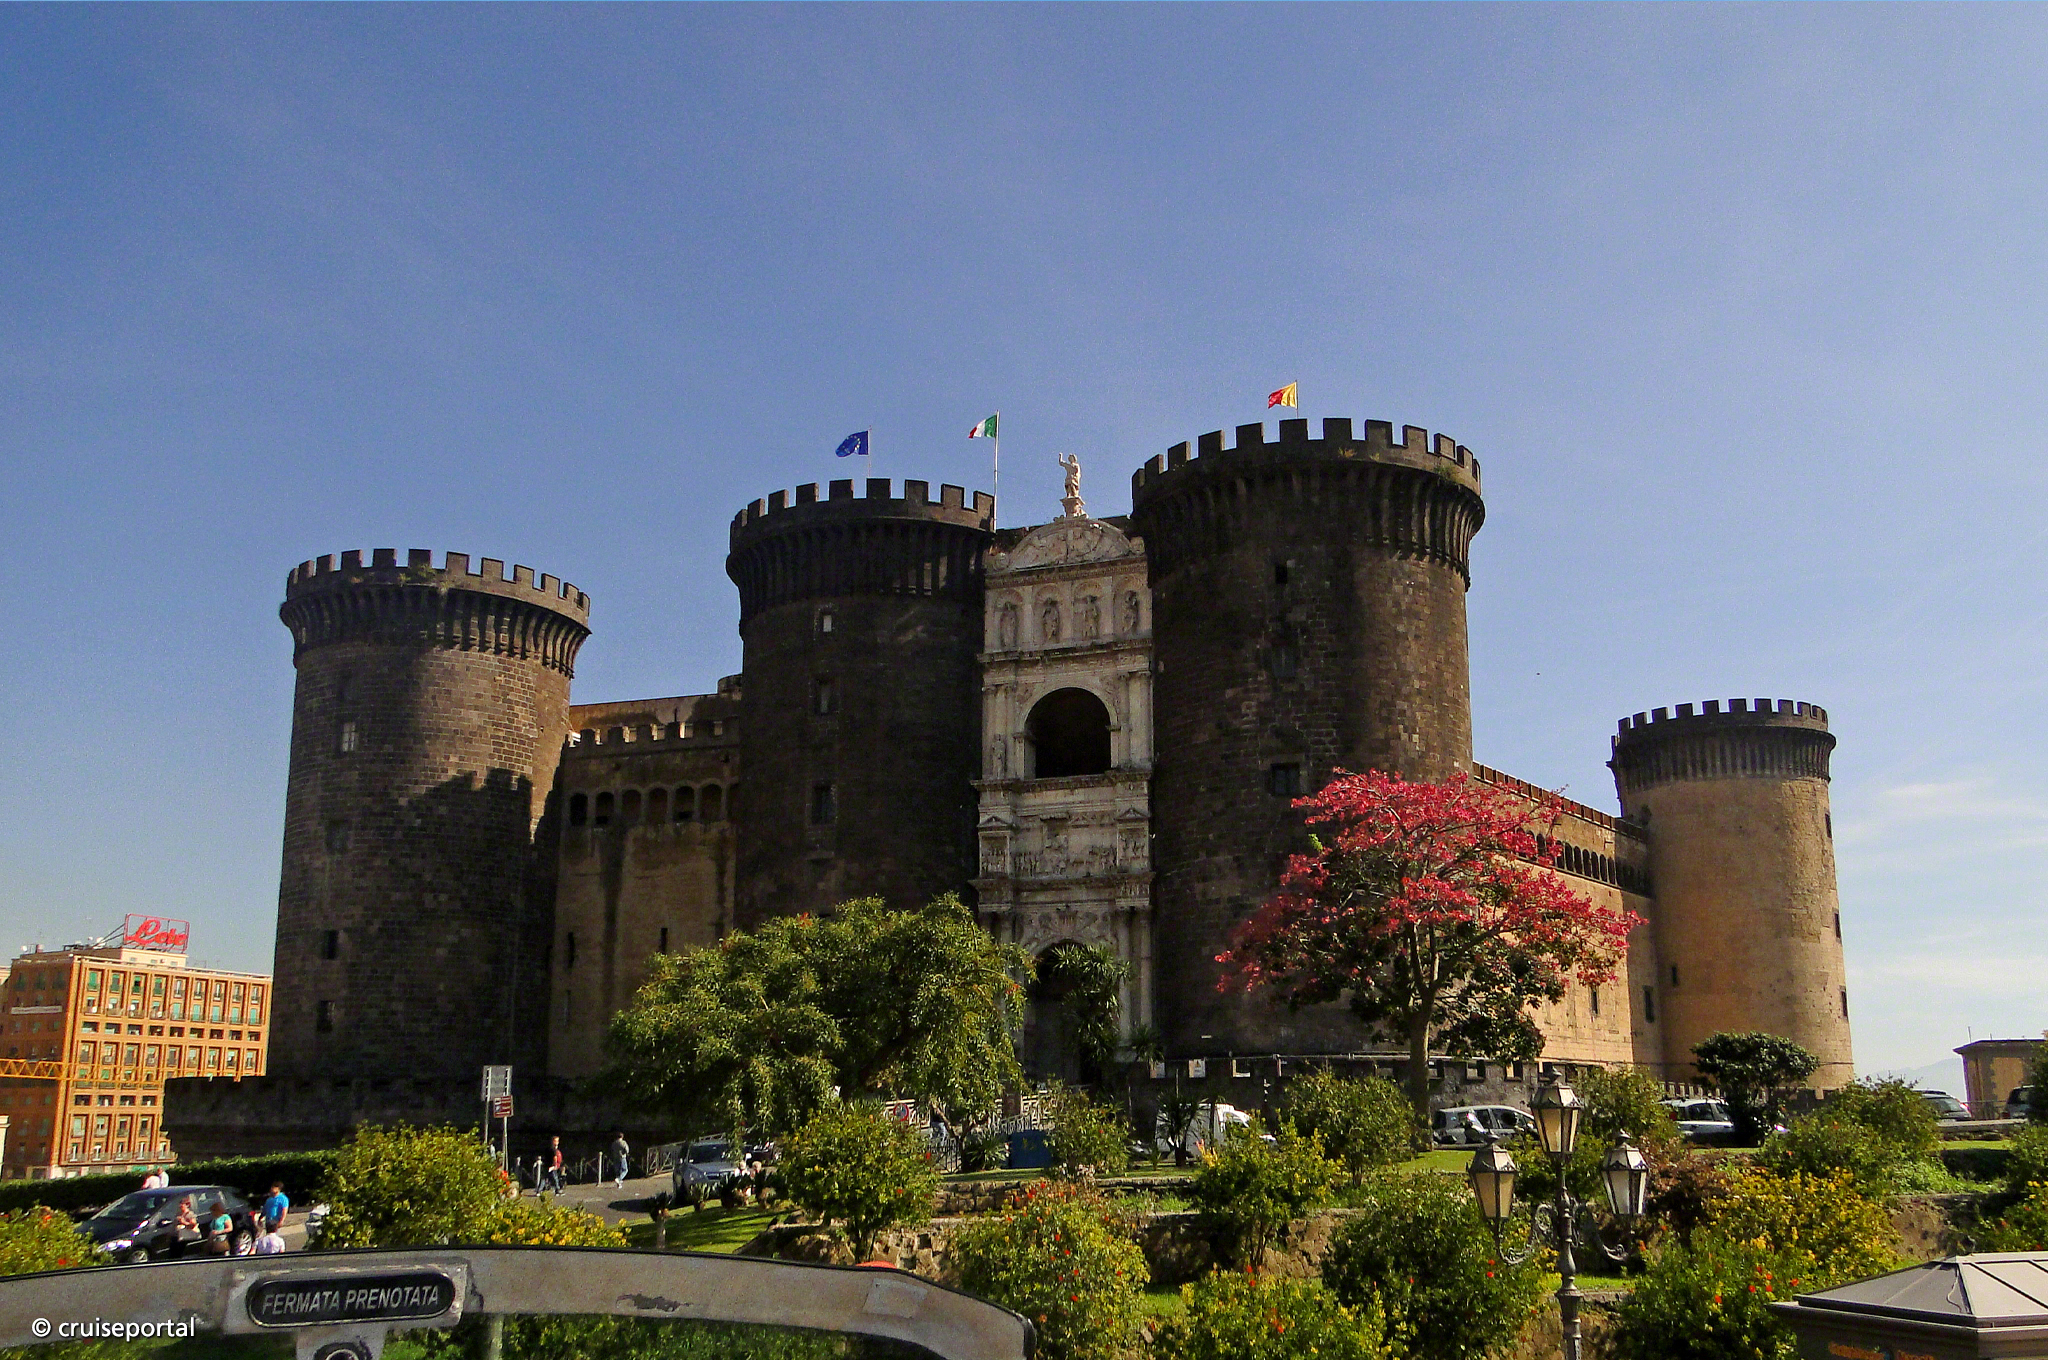 Castel Nuovo